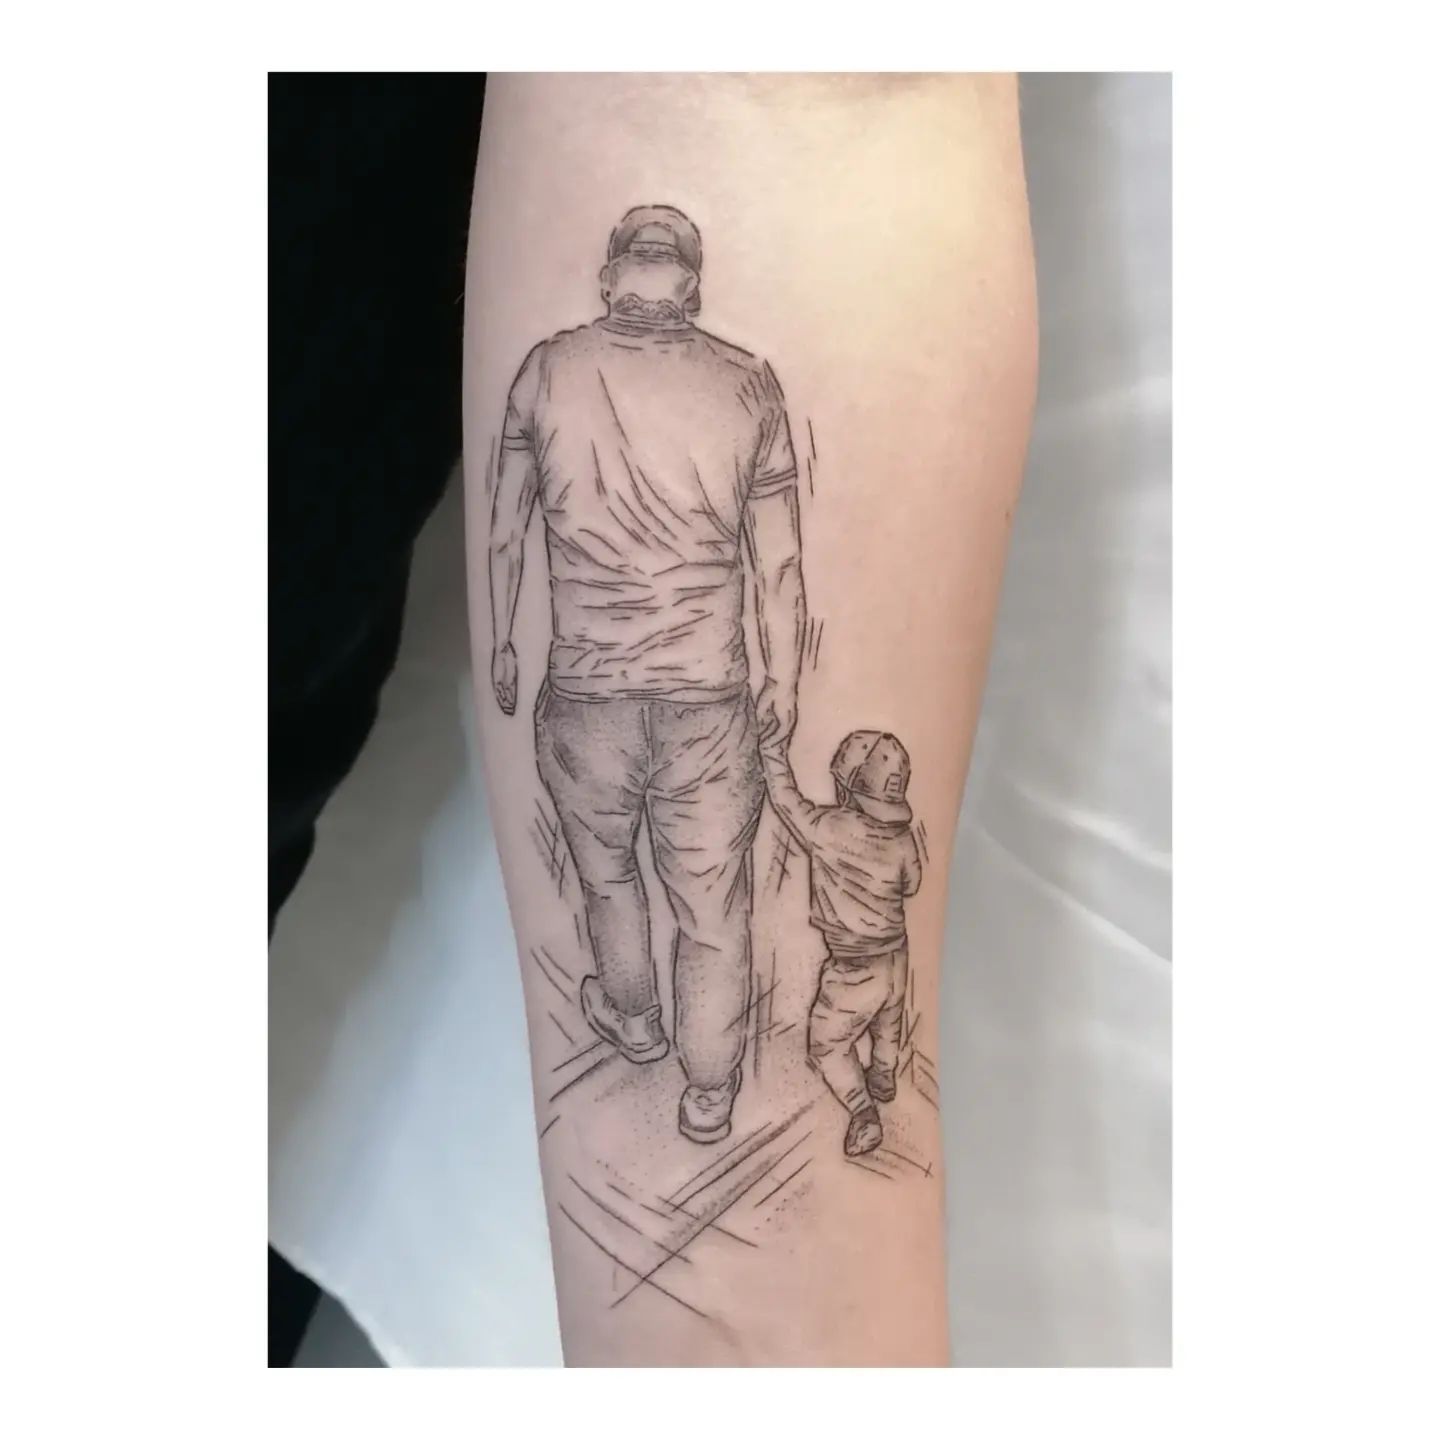 Matt Damon Gets a Sentimental Tattoo Dedicated to His Late Father